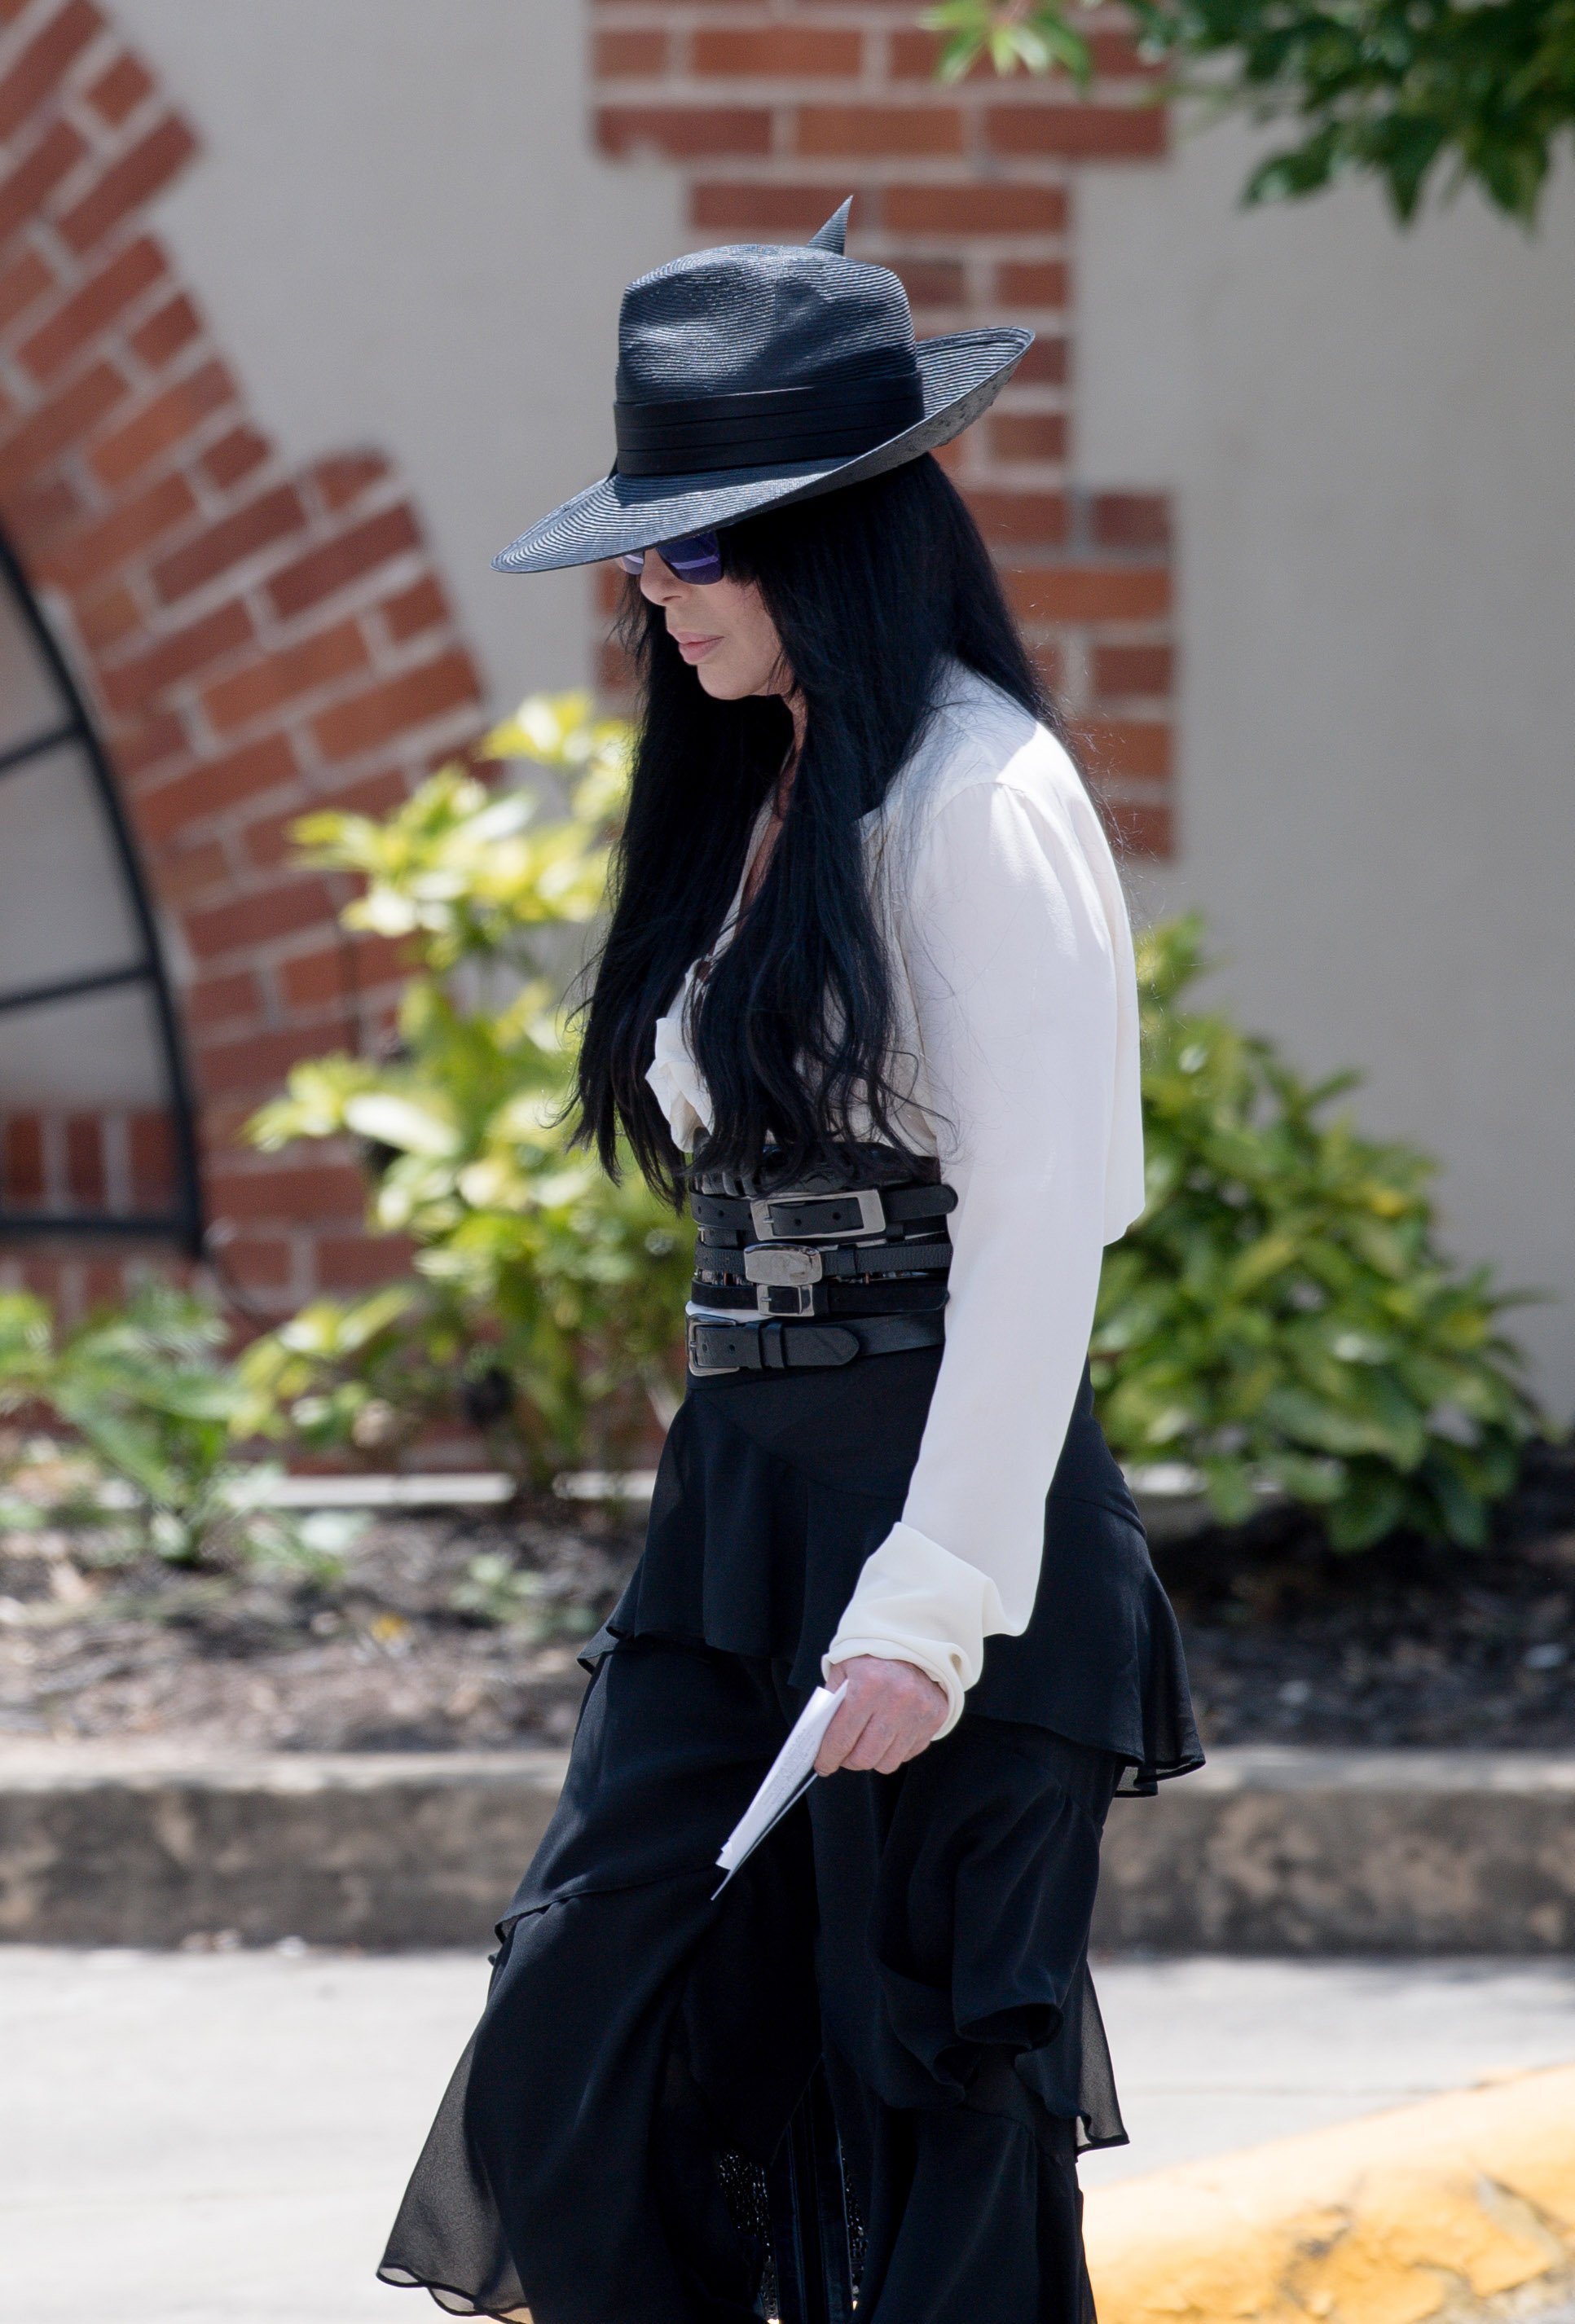 Cher attends the Gregg Allman funeral on June 3, 2017 in Macon, Georgia